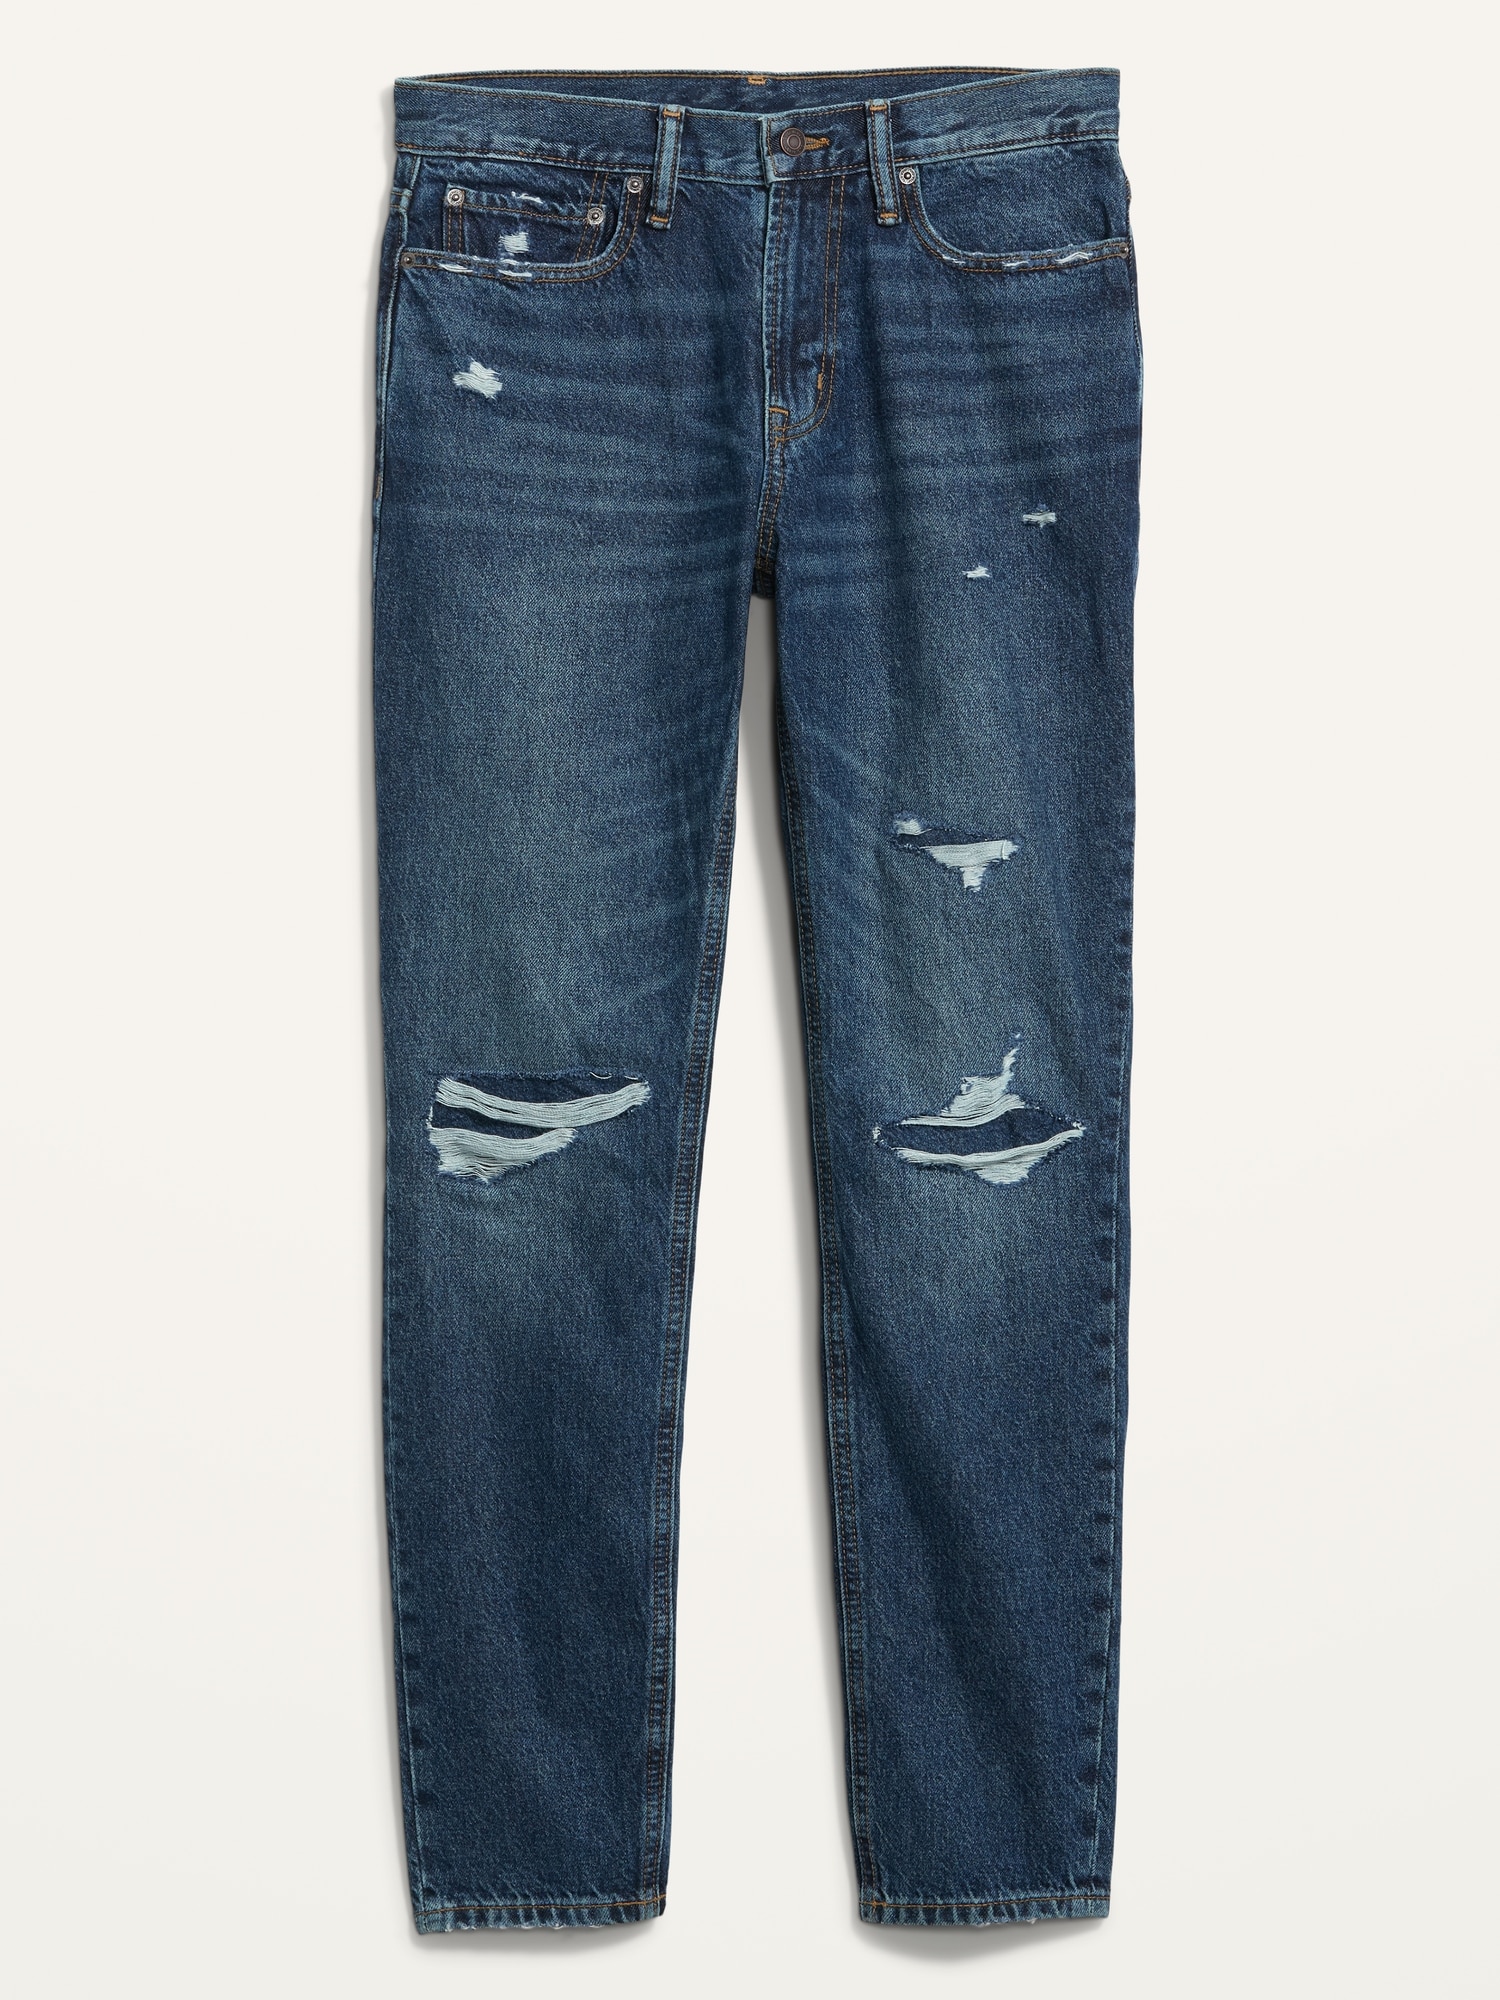 Old Navy Original Taper Non-Stretch Jeans for Men blue. 1